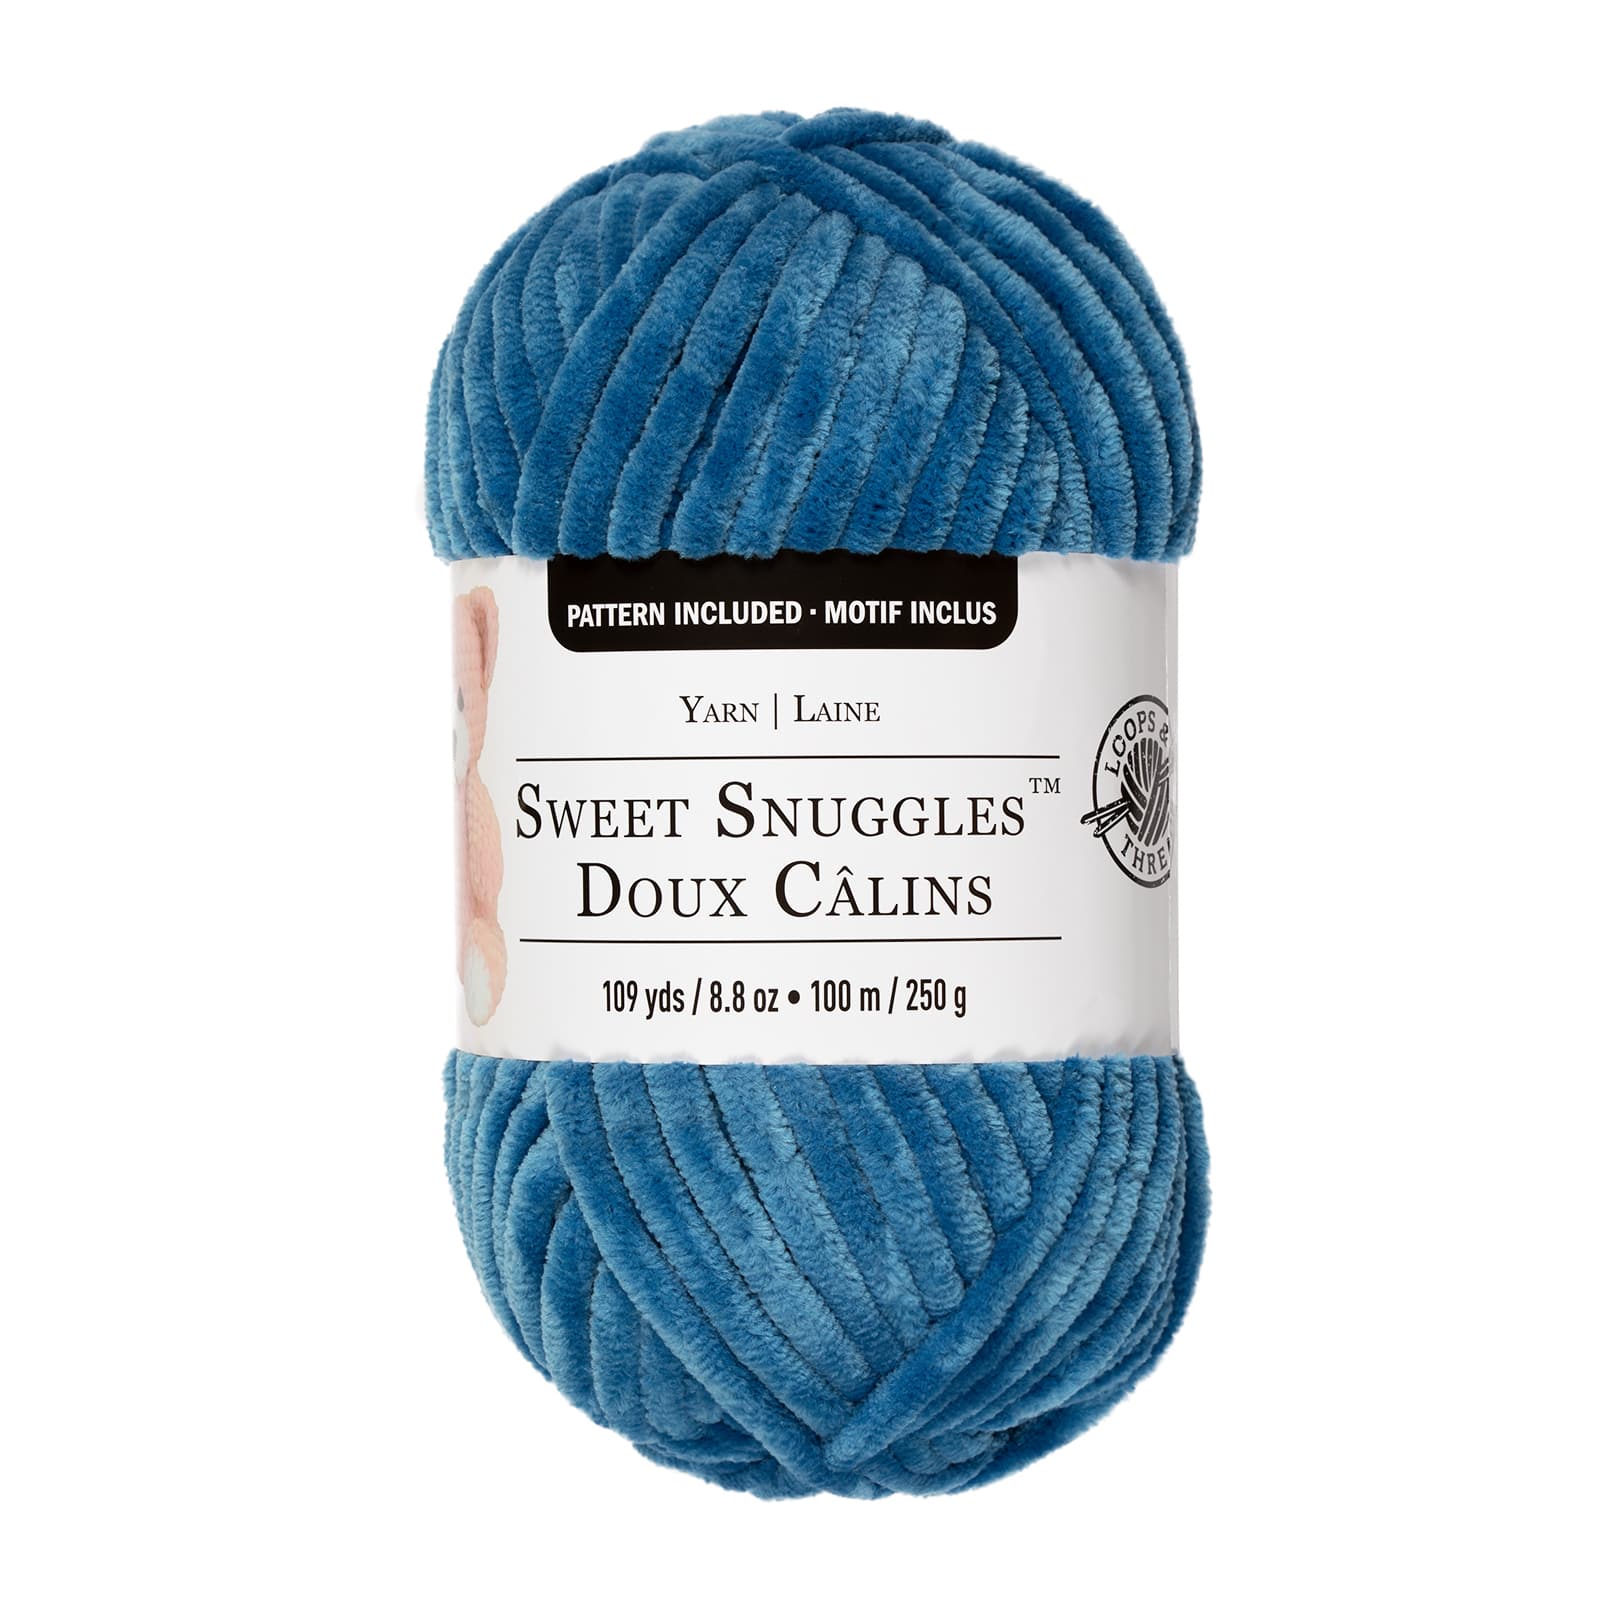 Sweet Snuggles Lite Blossom™ Yarn by Loops & Threads